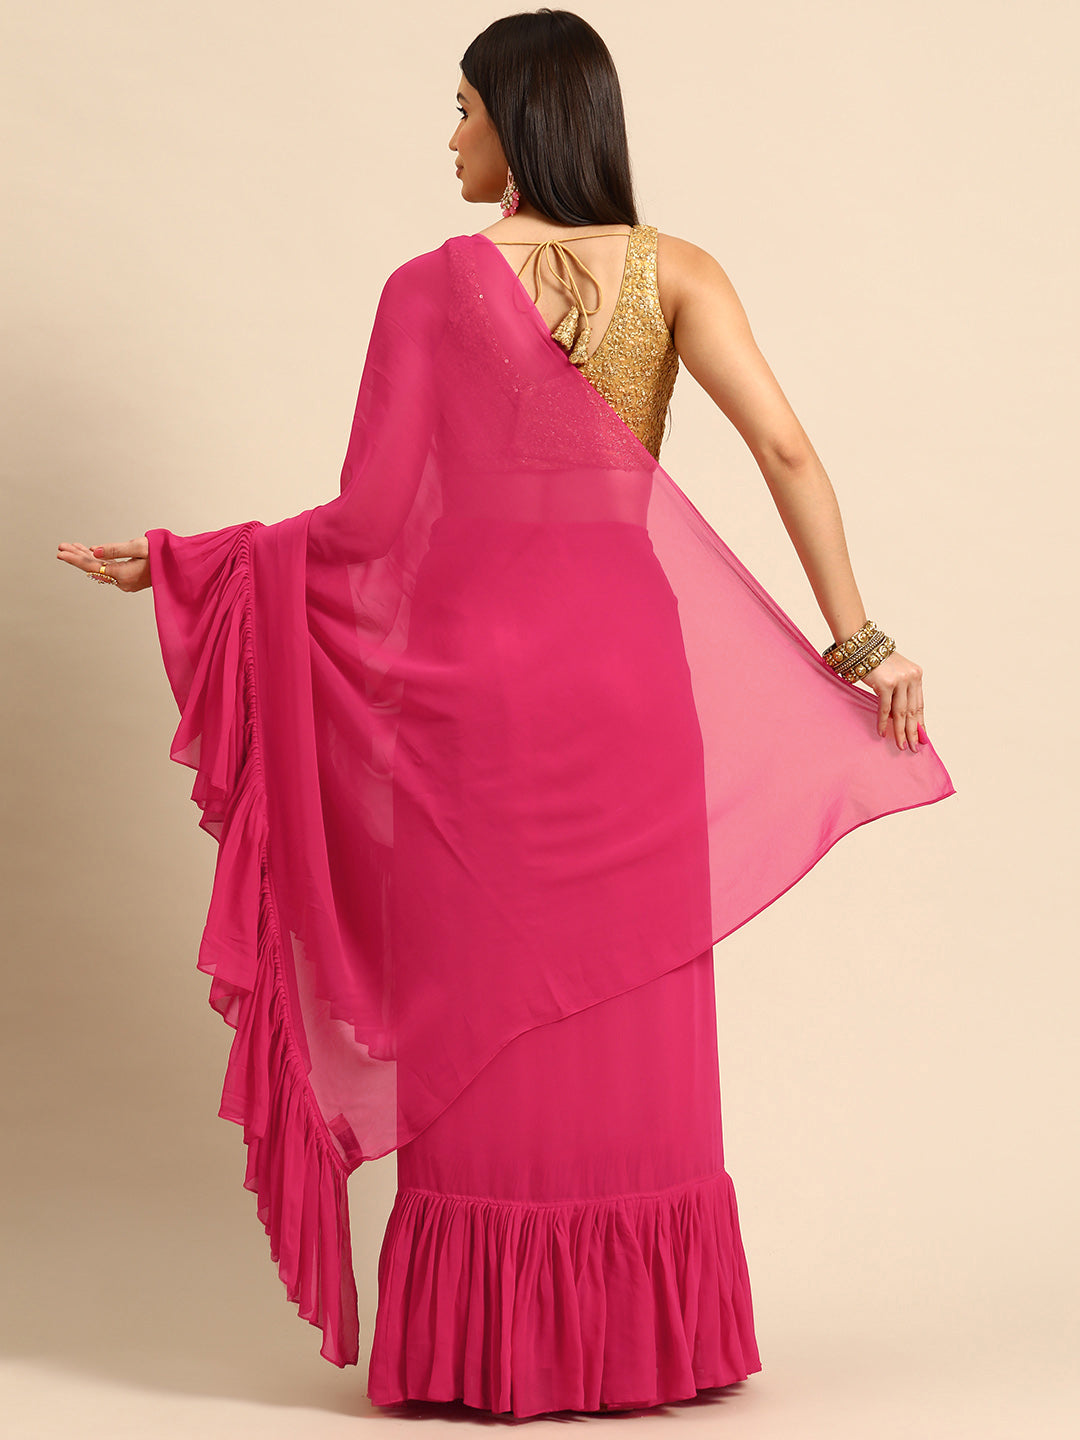 Designer Pink Chiffon Saree